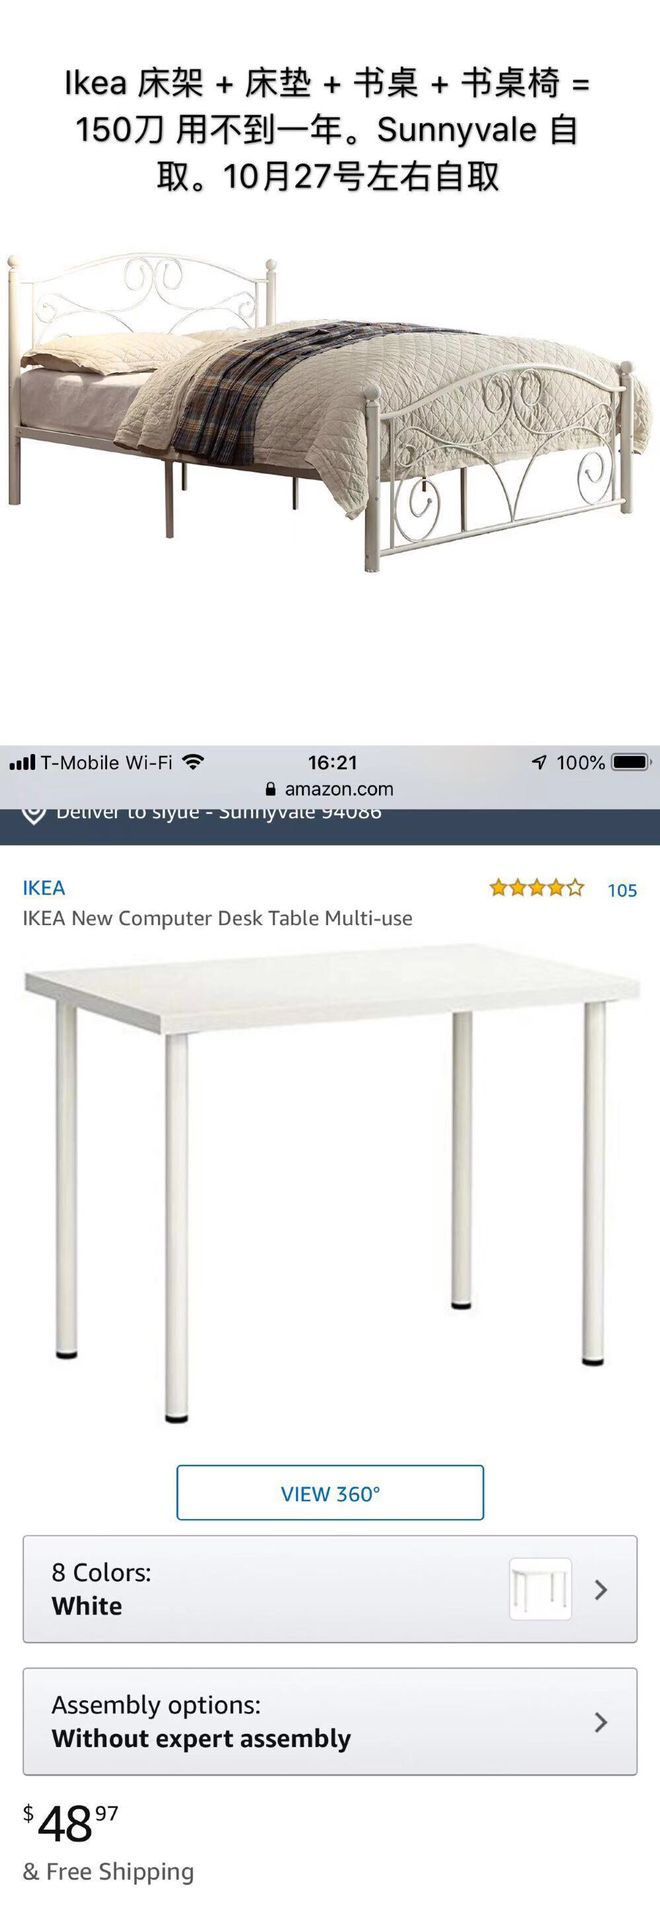 IKEA Bed, frame, mattress, desk and chair